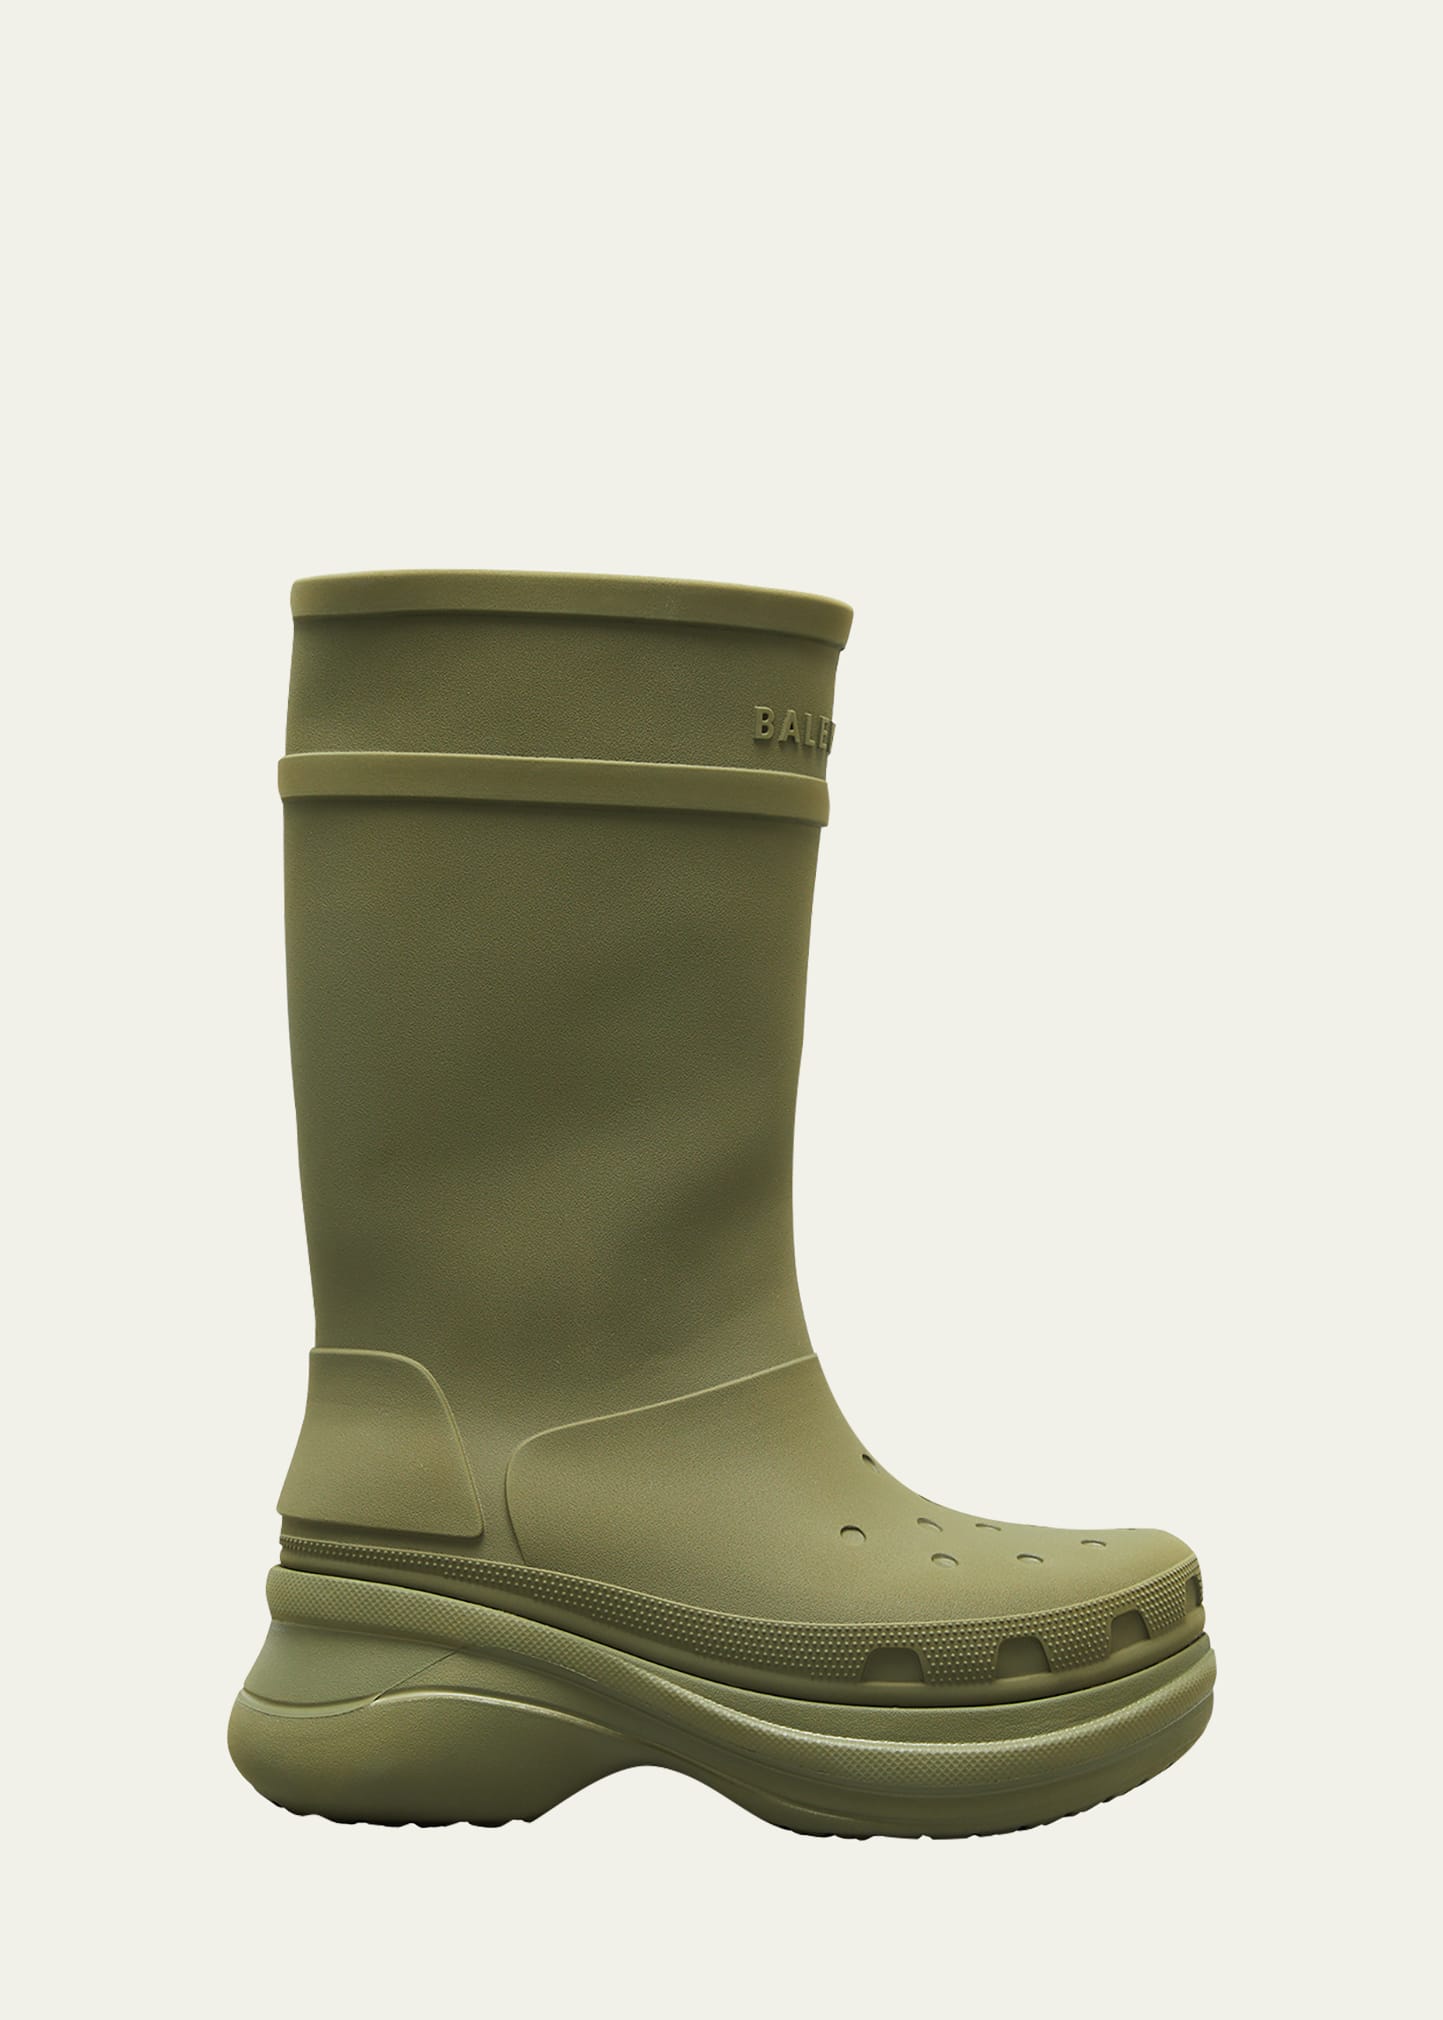 Balenciaga X Crocs Men's Tonal Rubber Rain Boots In Army Green